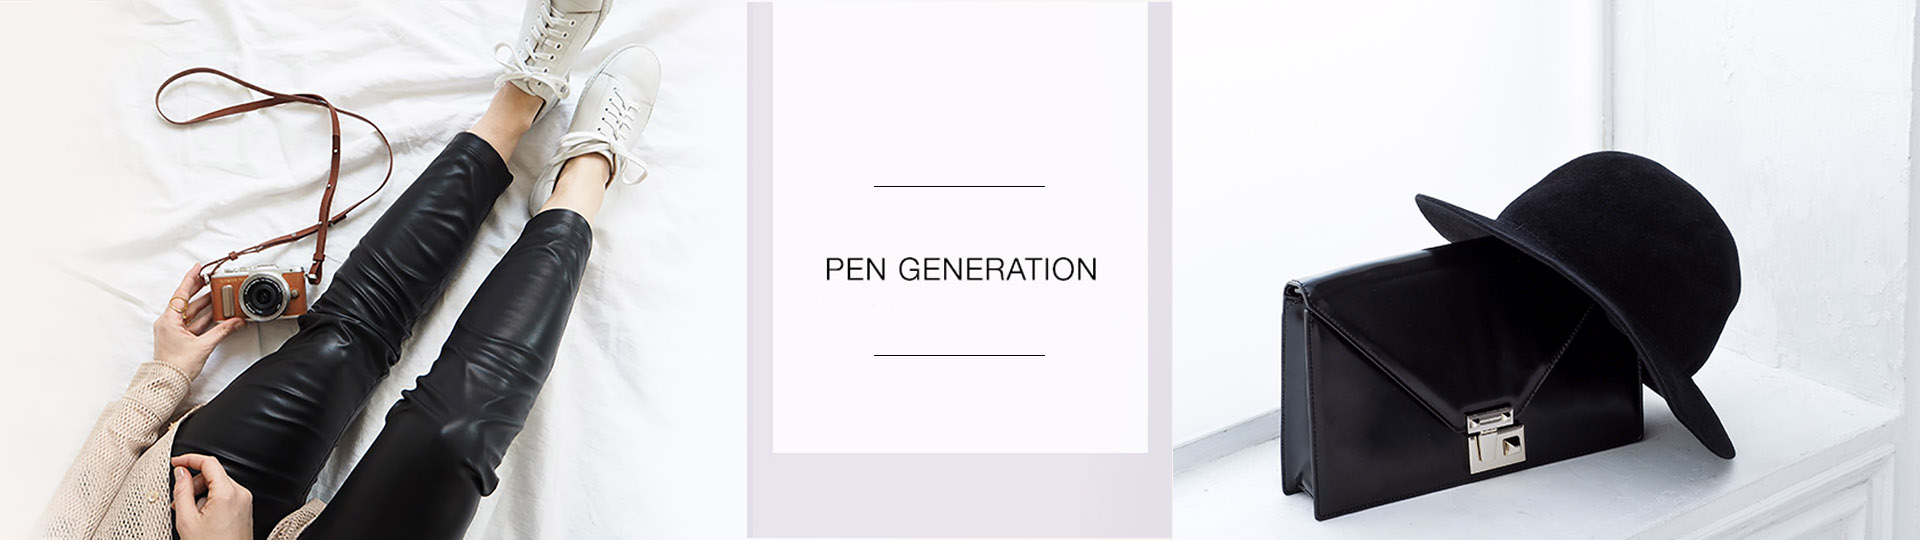 PEN Generation